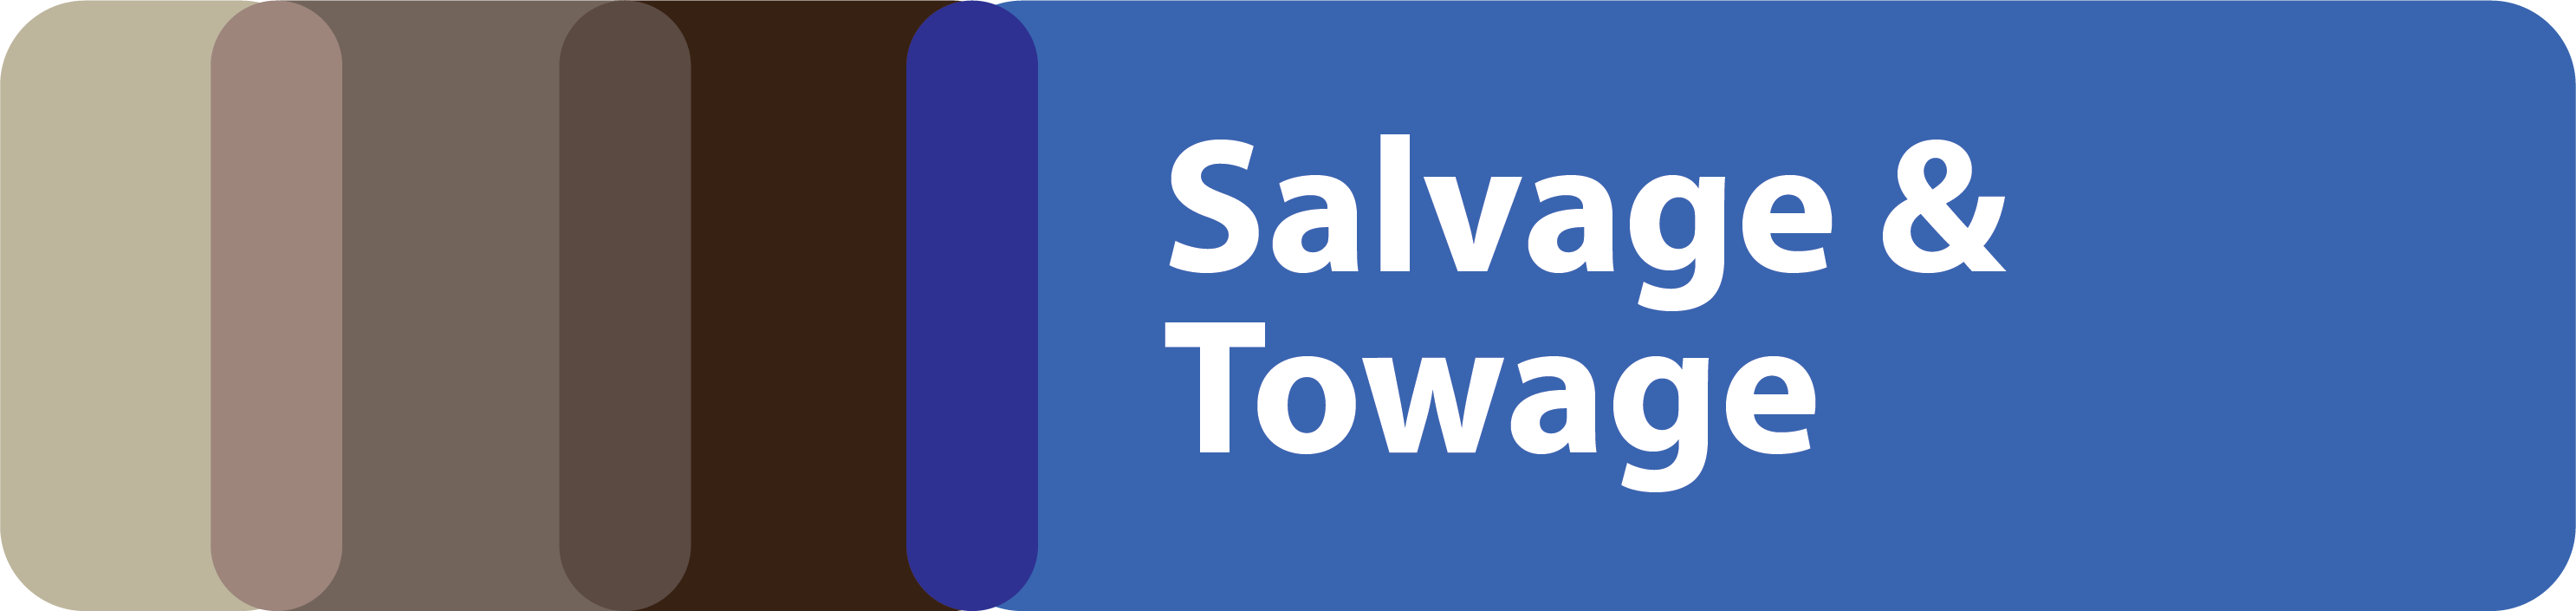 Salvage & Towage